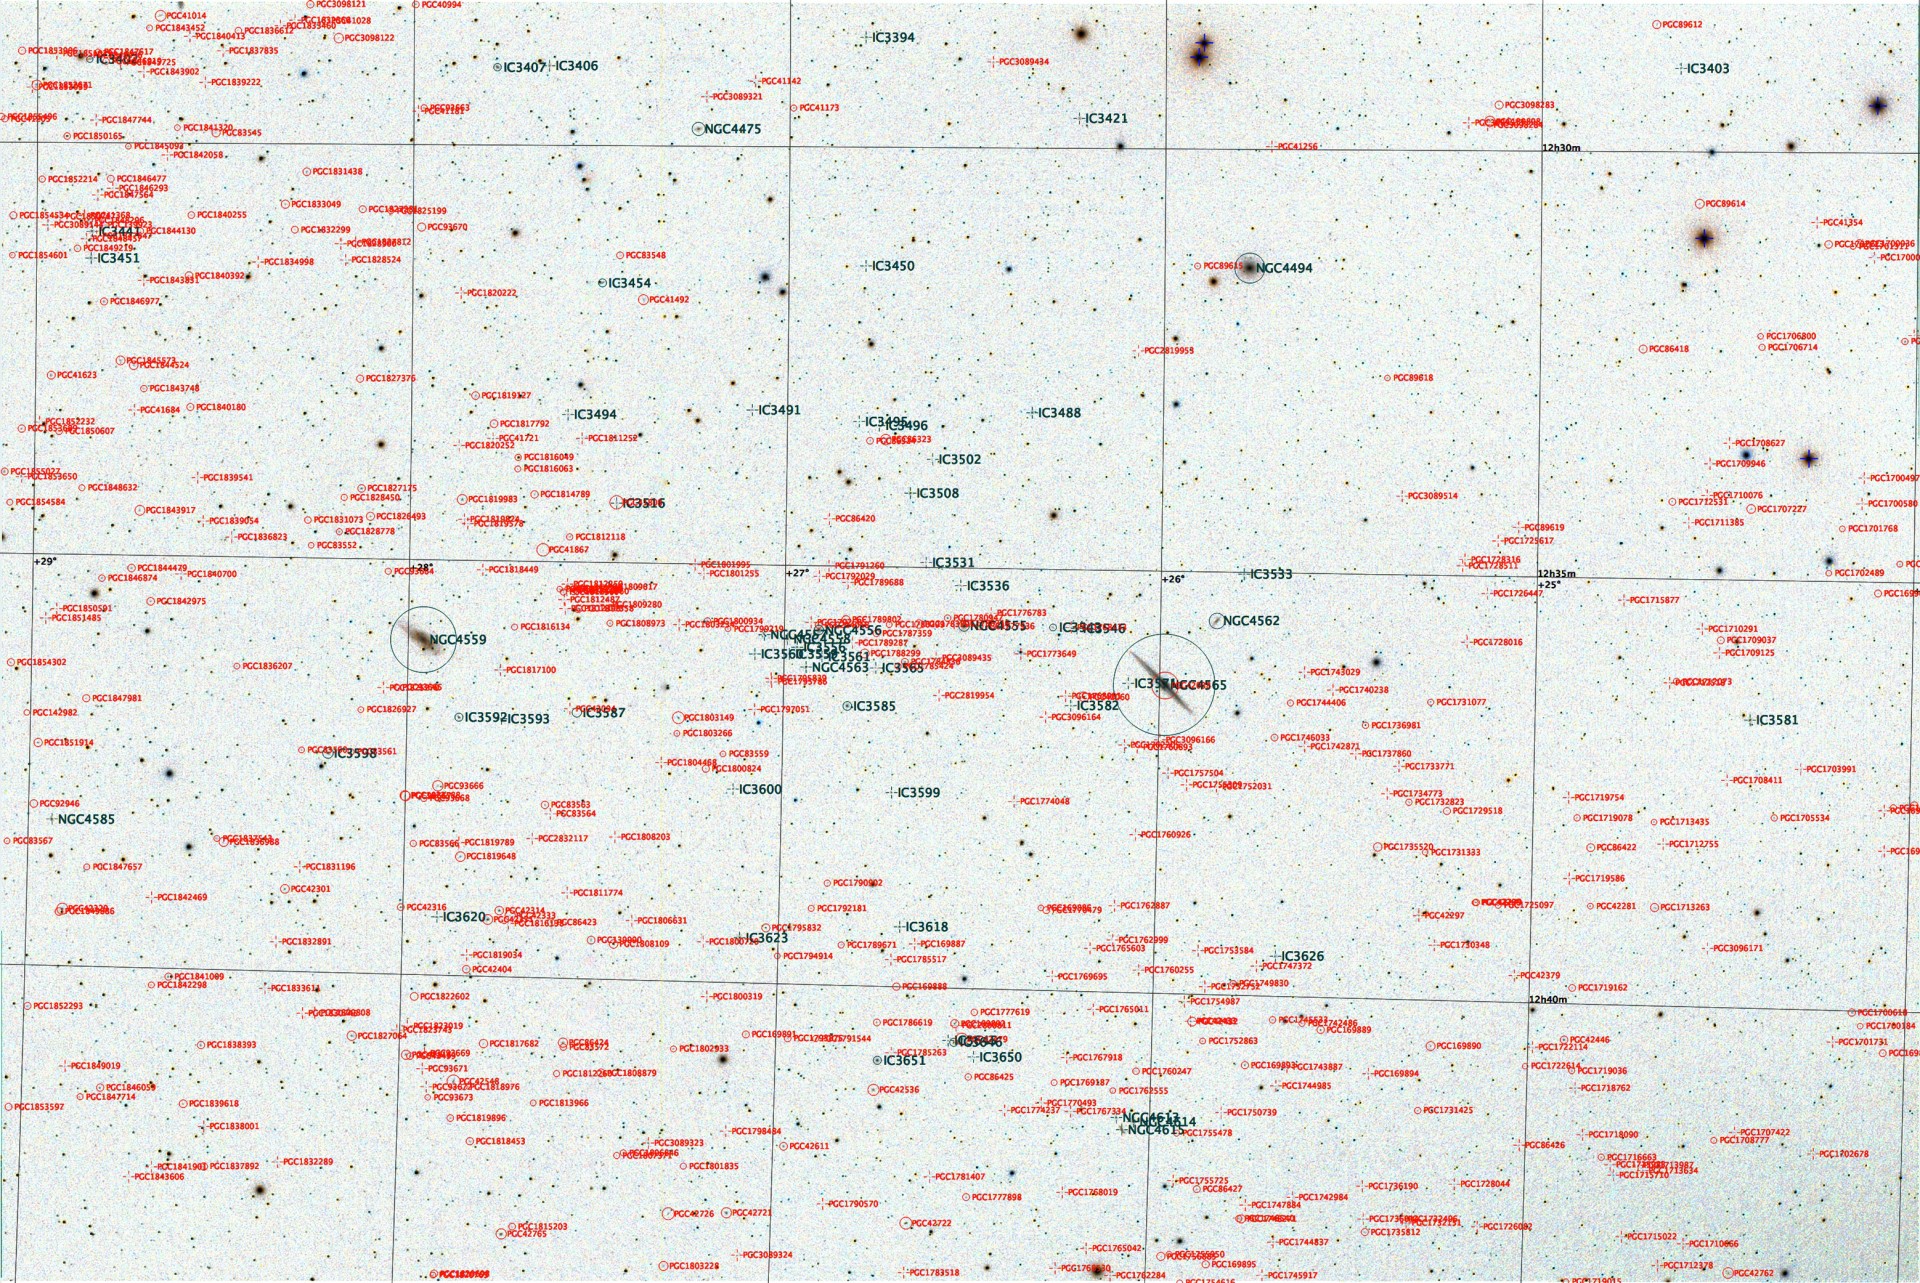 NGC4565_Annotated.jpg